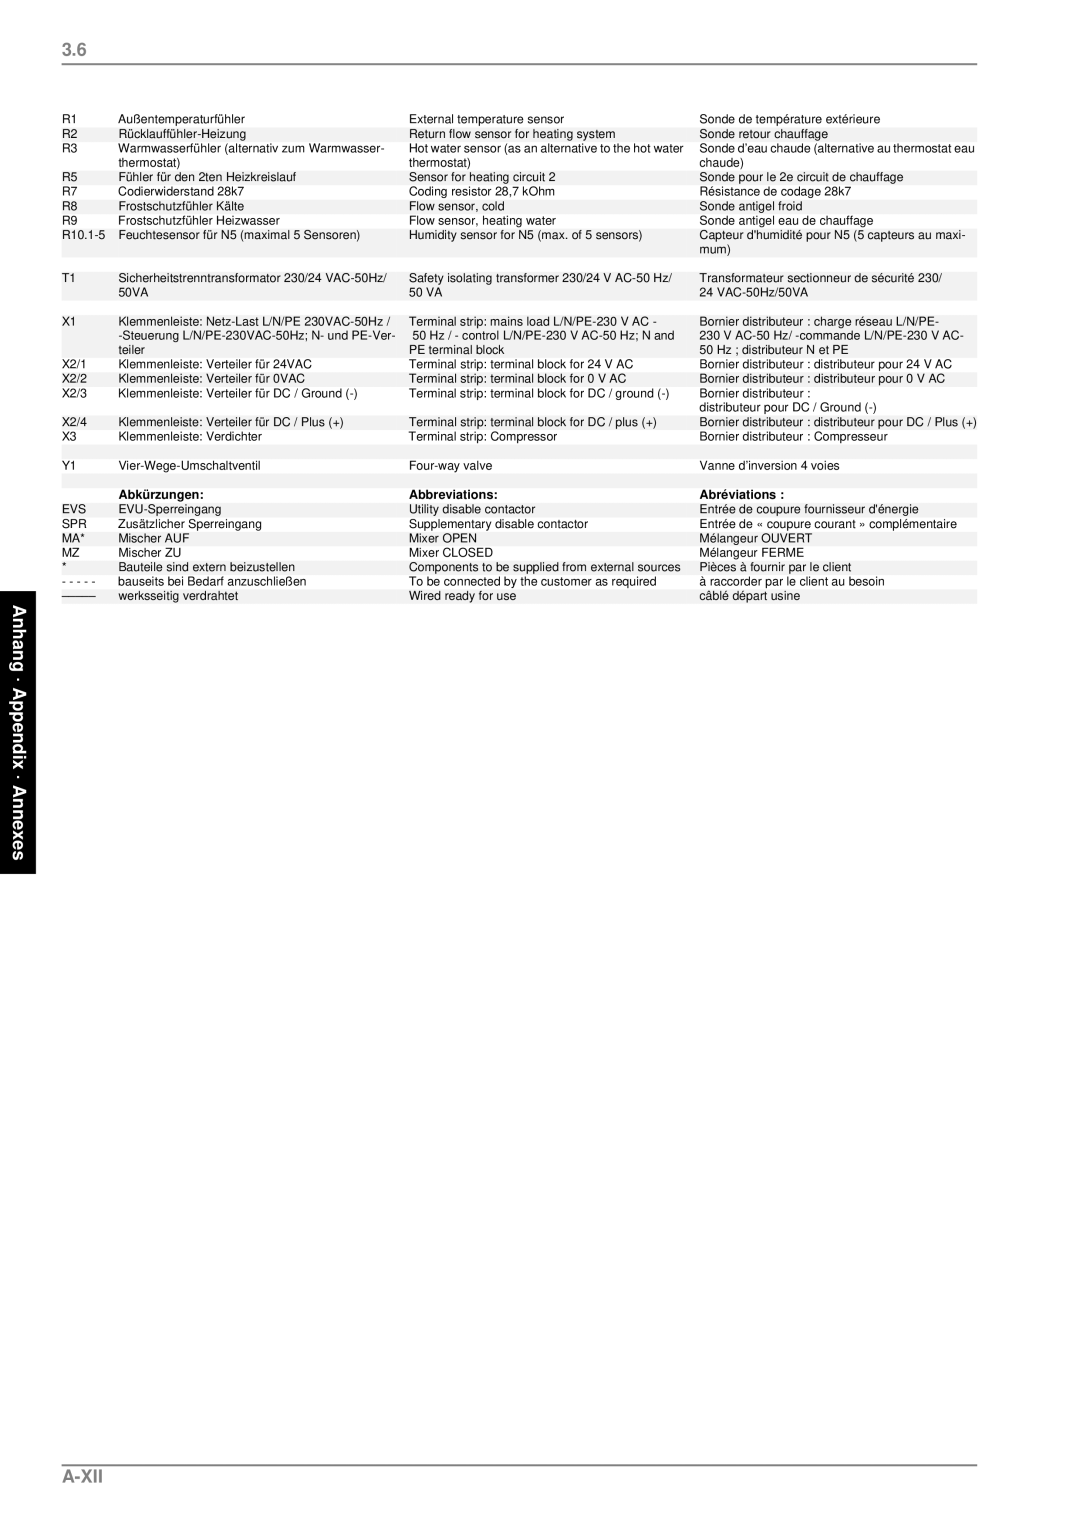 Dimplex LIK 8MER manual Anhang · Appendix · Annexes, A-Xii, Abkürzungen, Abbreviations, Abréviations 